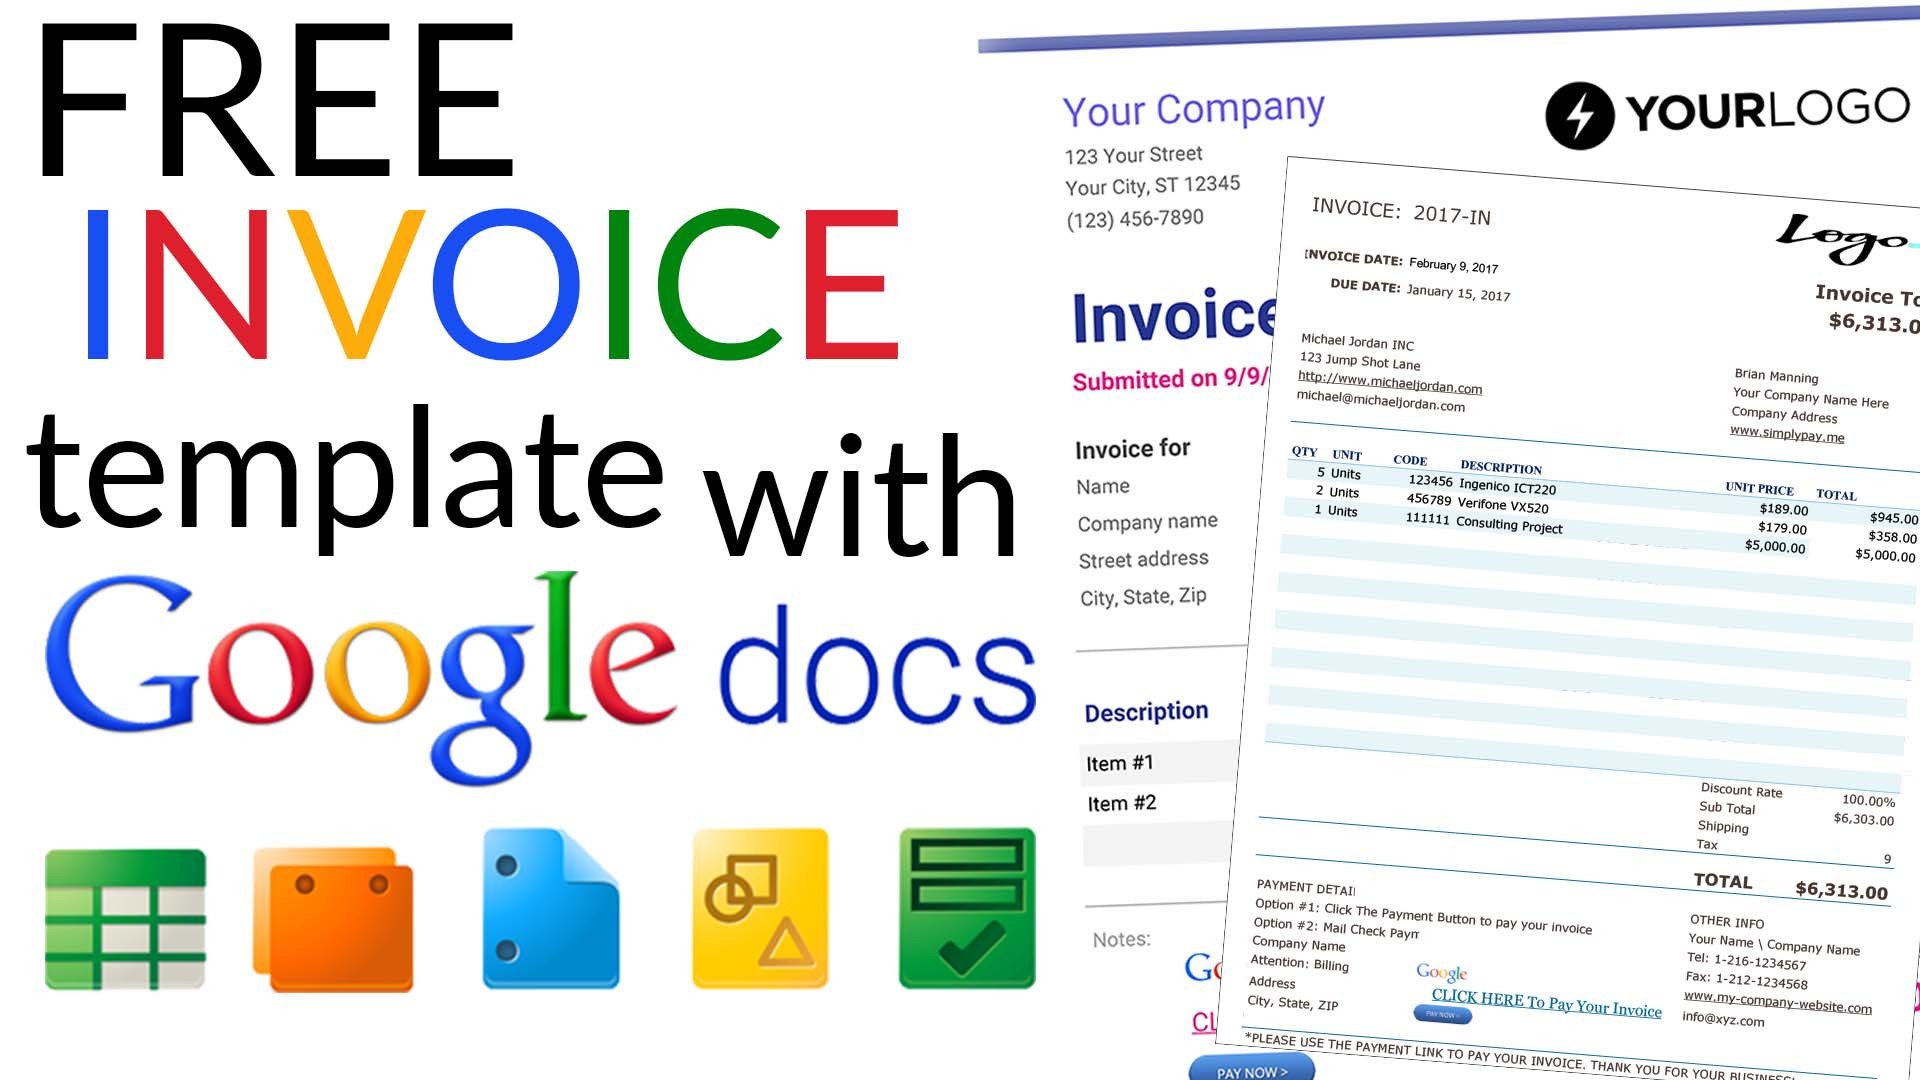 Free Invoice Templates With Google Docs